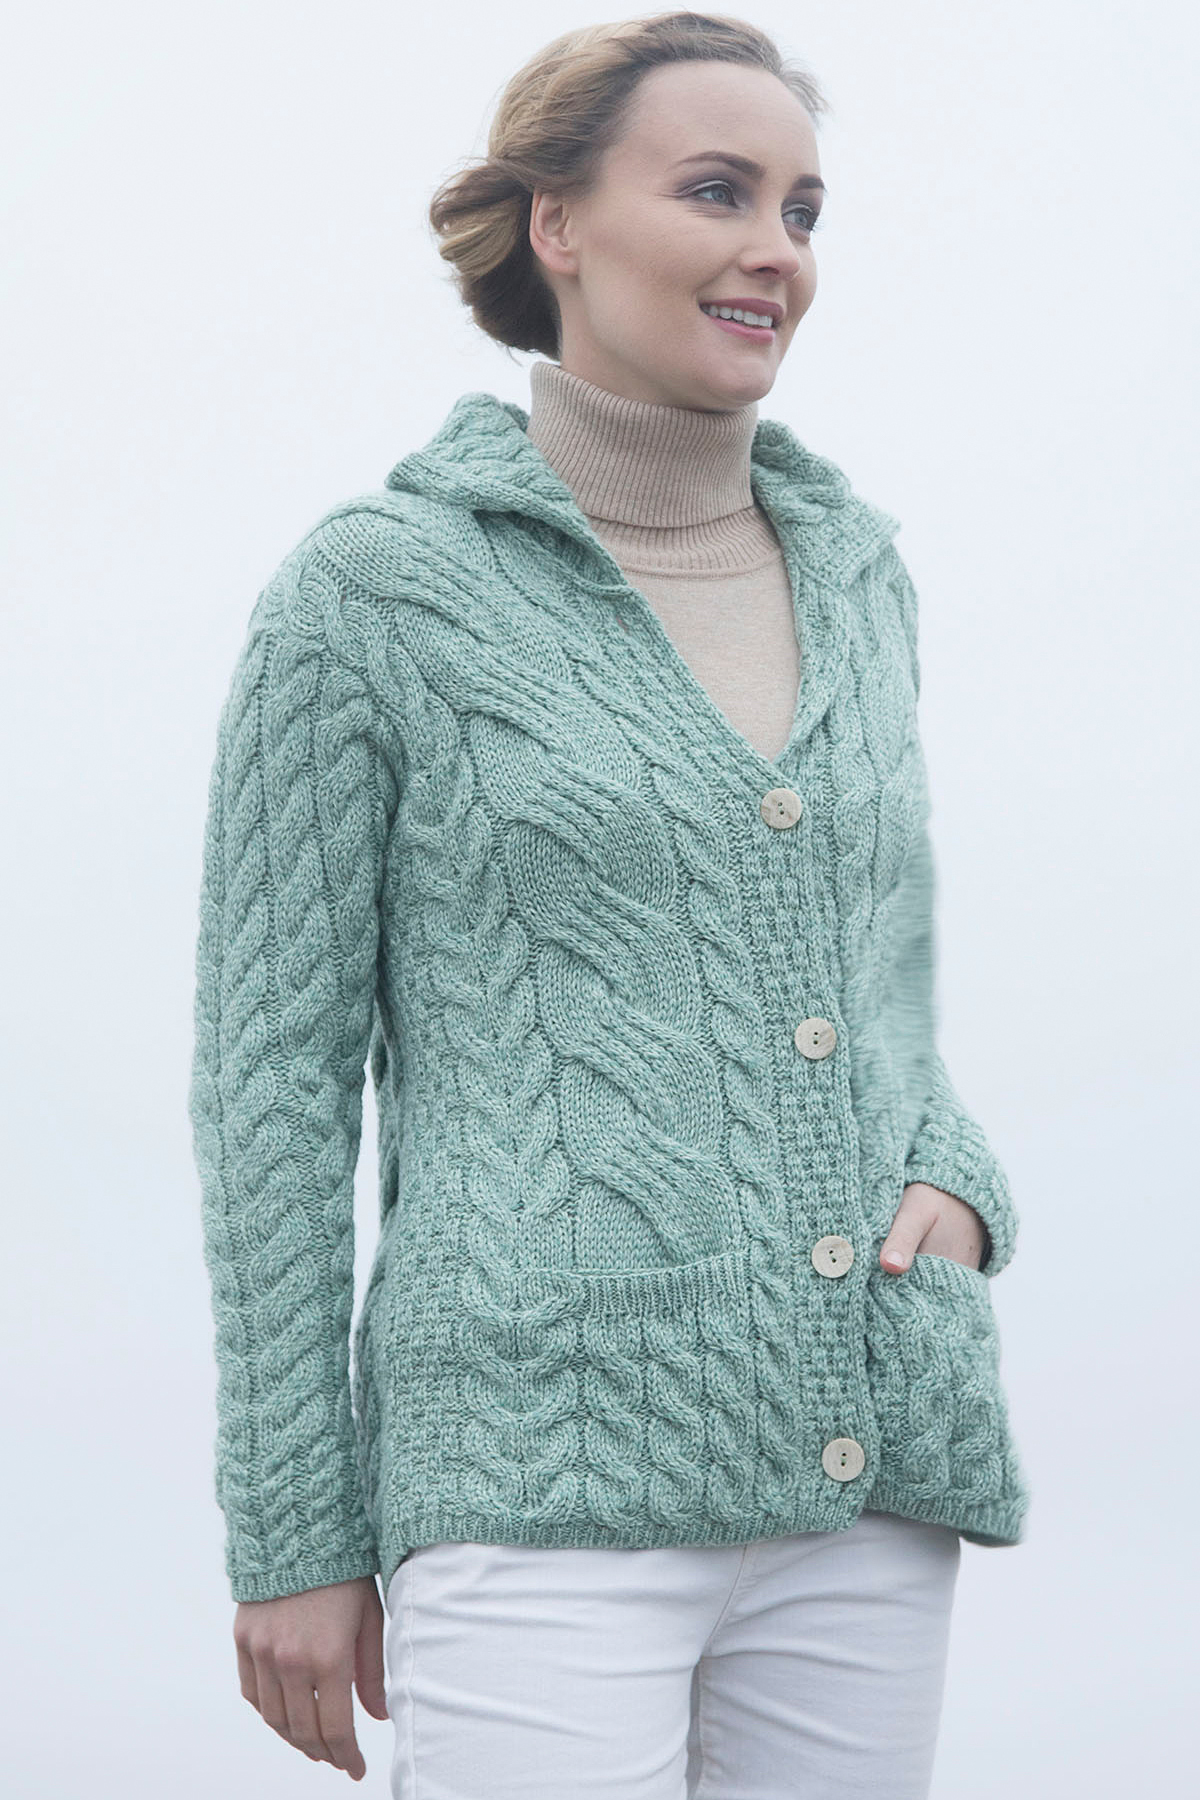 frill Plantation Arthur Conan Doyle Carraig Donn womens Sweater Puchase 092915